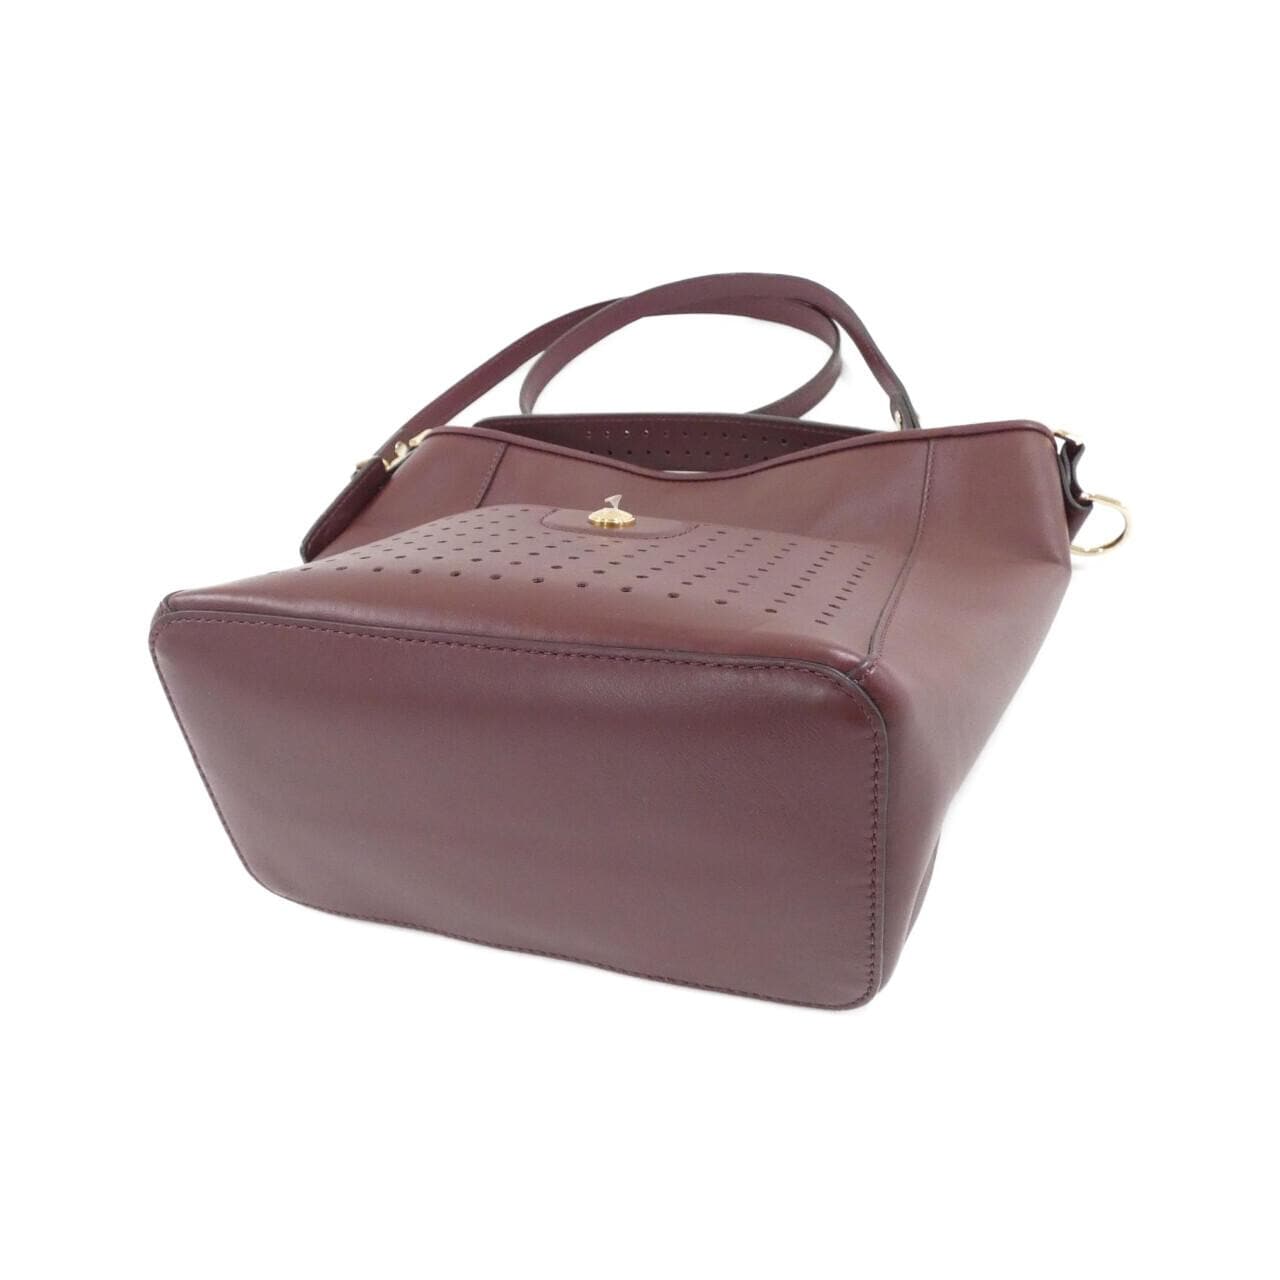 [BRAND NEW] Longchamp 10080 883 bag